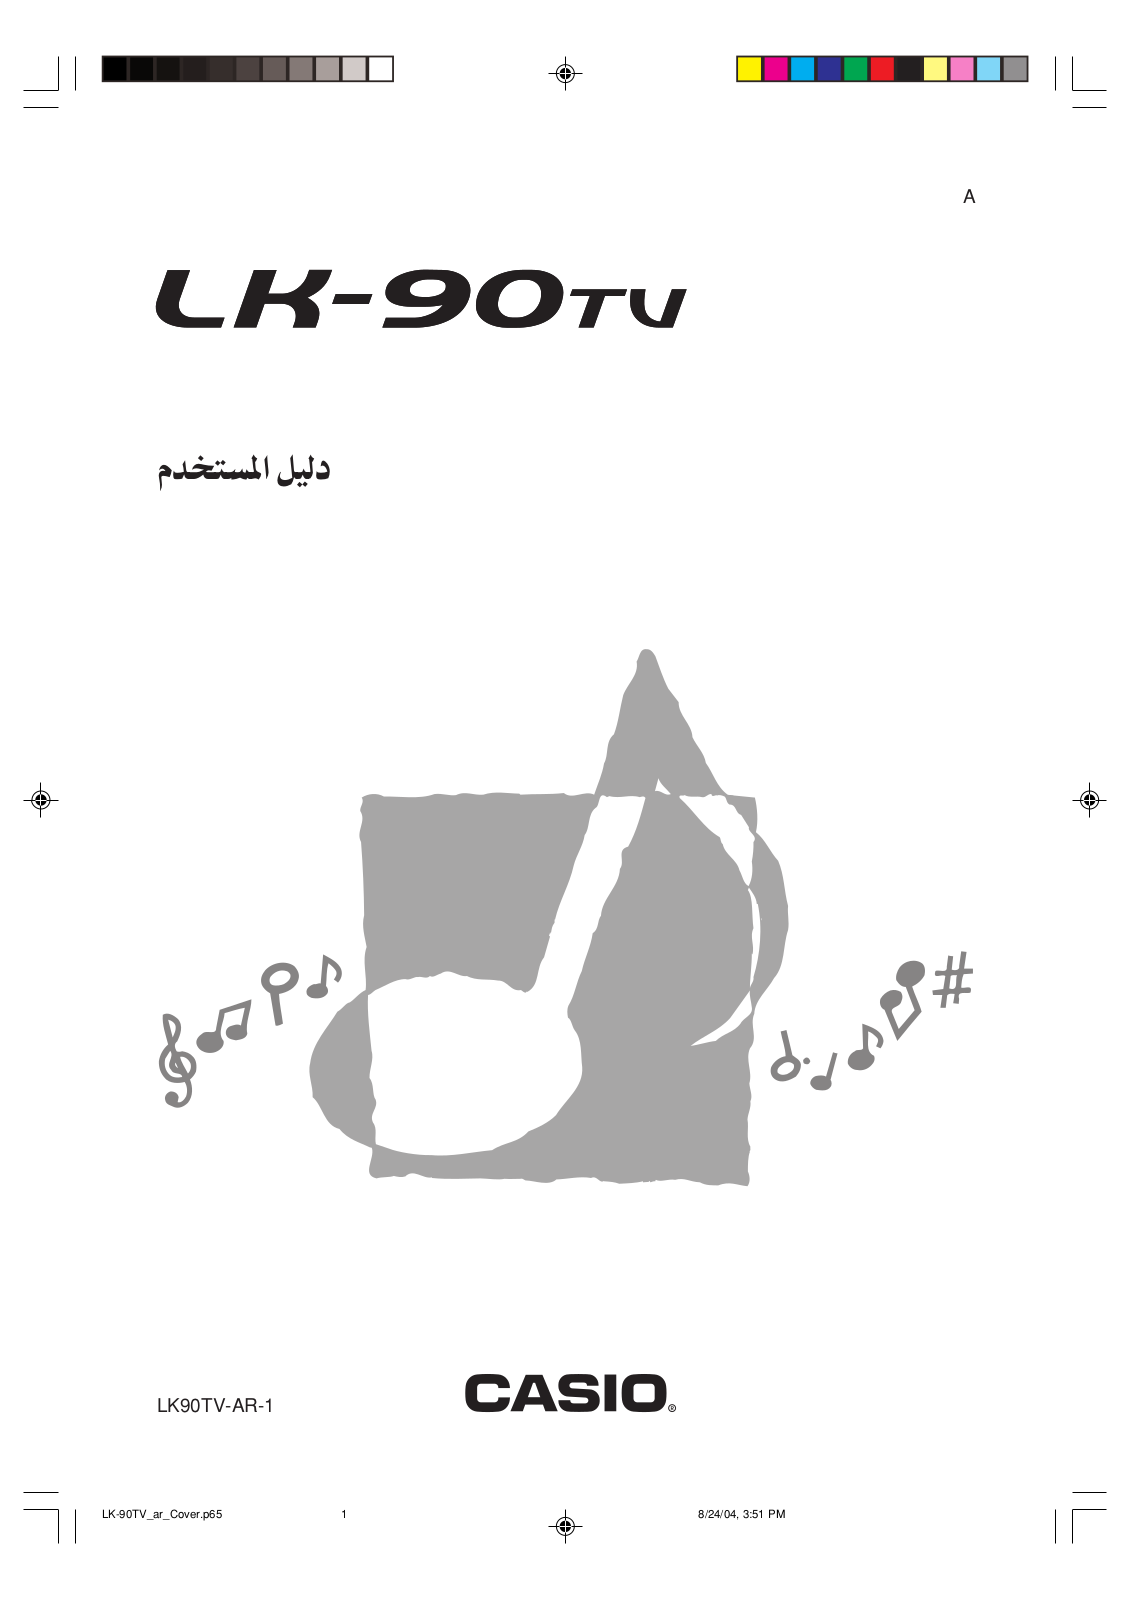 Casio LK-90tv Owner's Manual